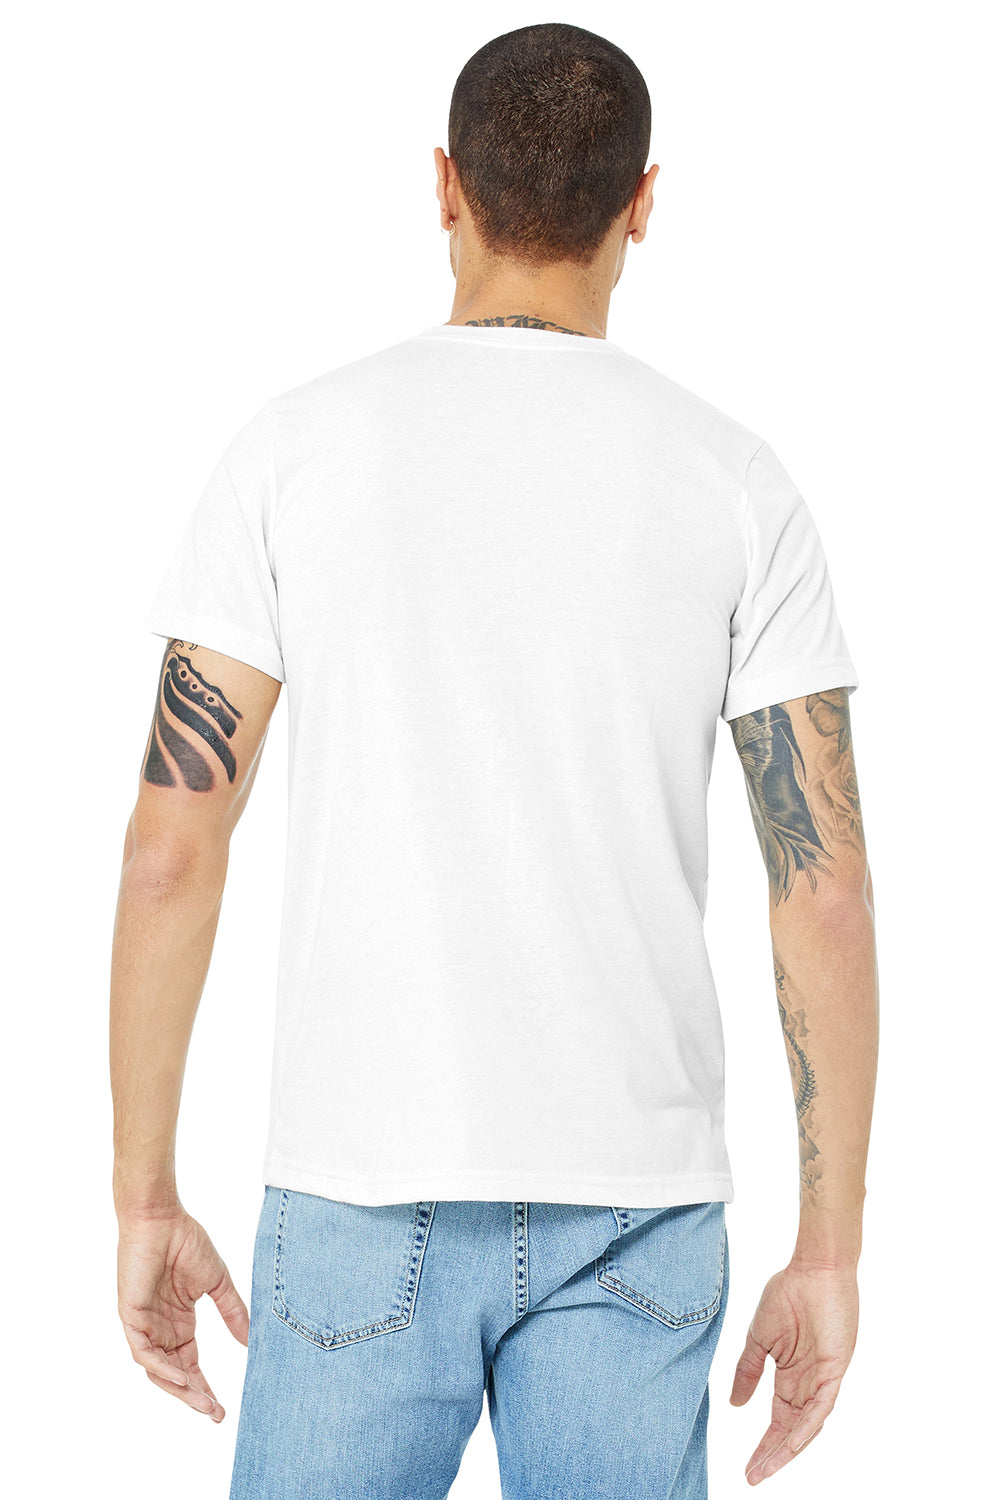 Bella + Canvas 3001U/3001USA Mens USA Made Jersey Short Sleeve Crewneck T-Shirt White Model Back